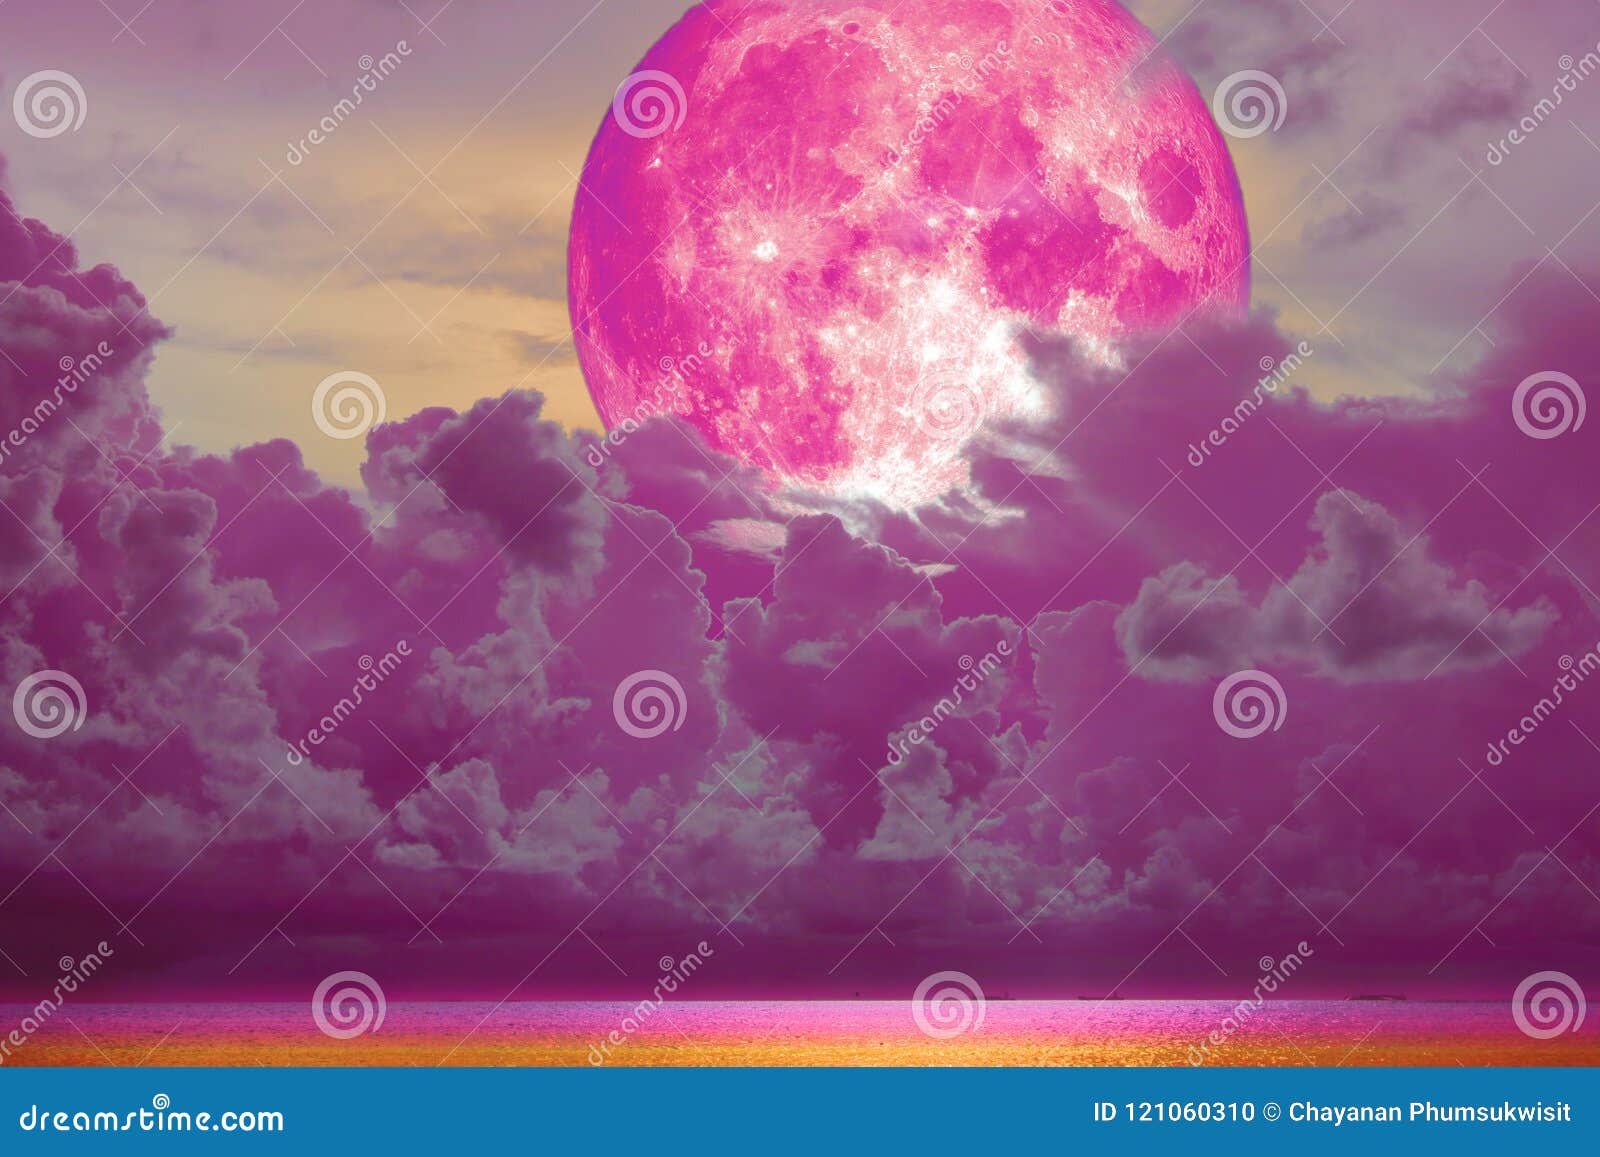 super full pink moon back magenta cloud over the sea